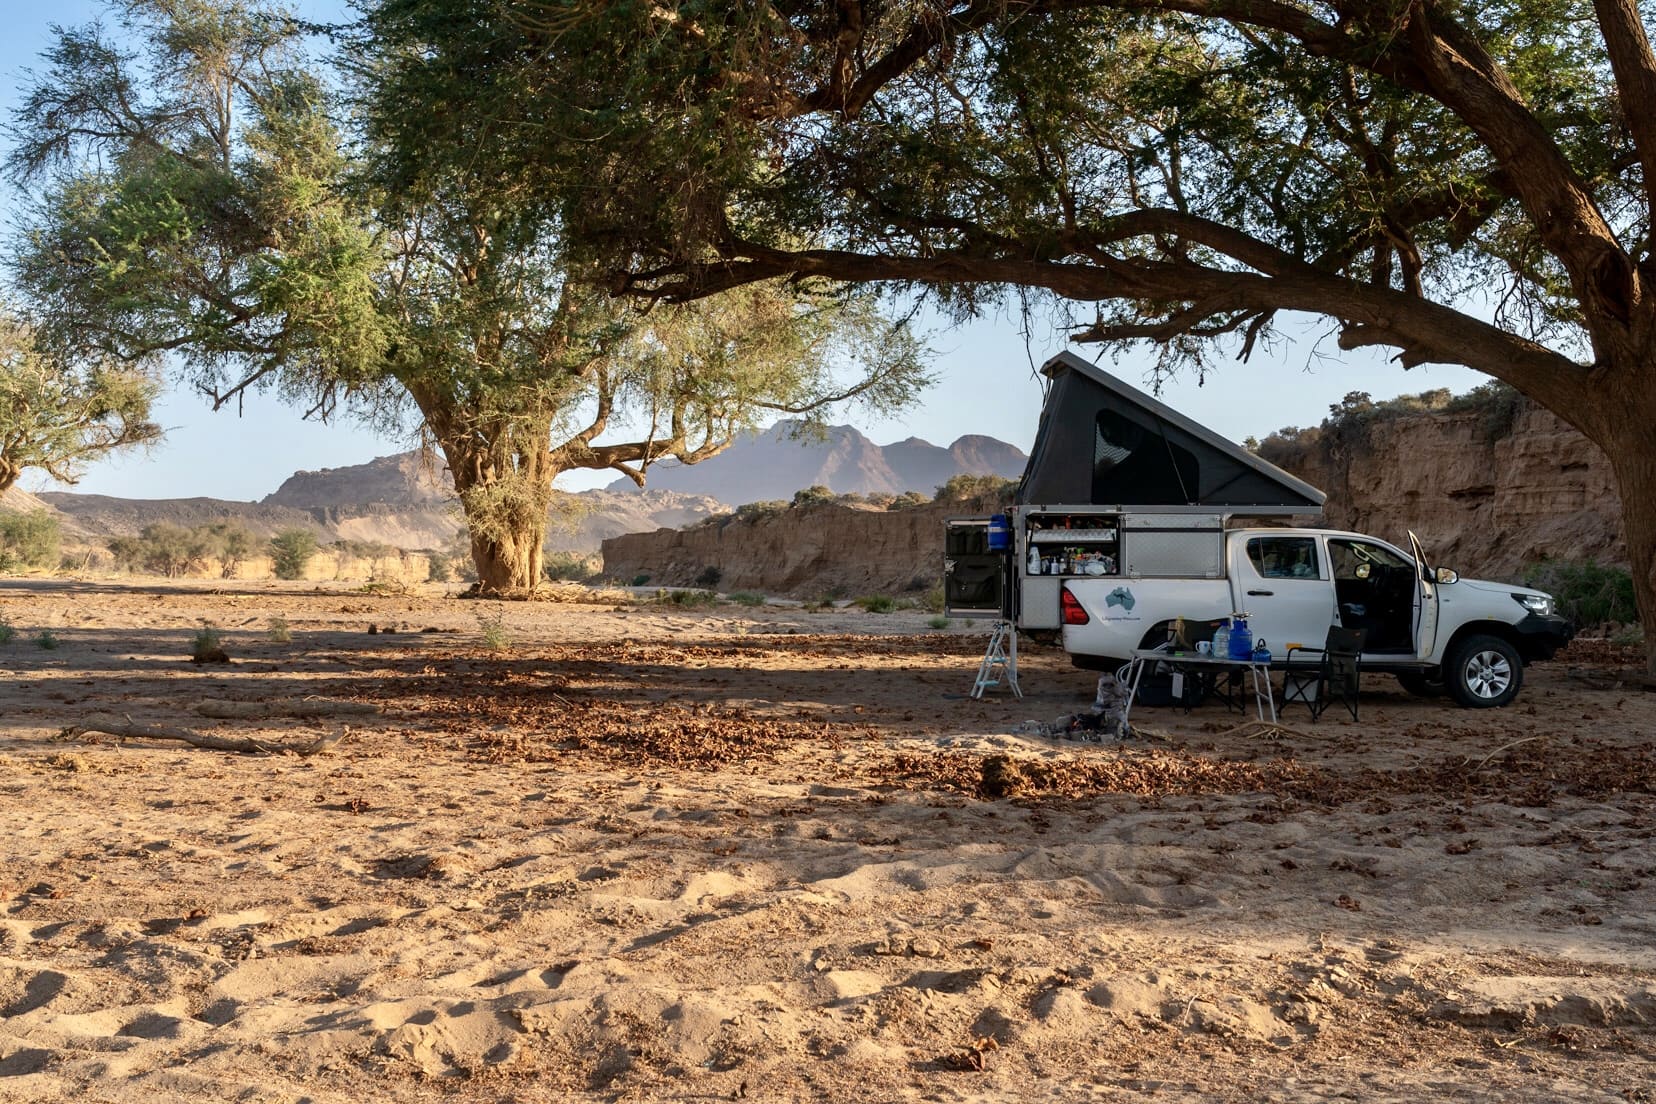 Huab-river wild campsite, Namibia